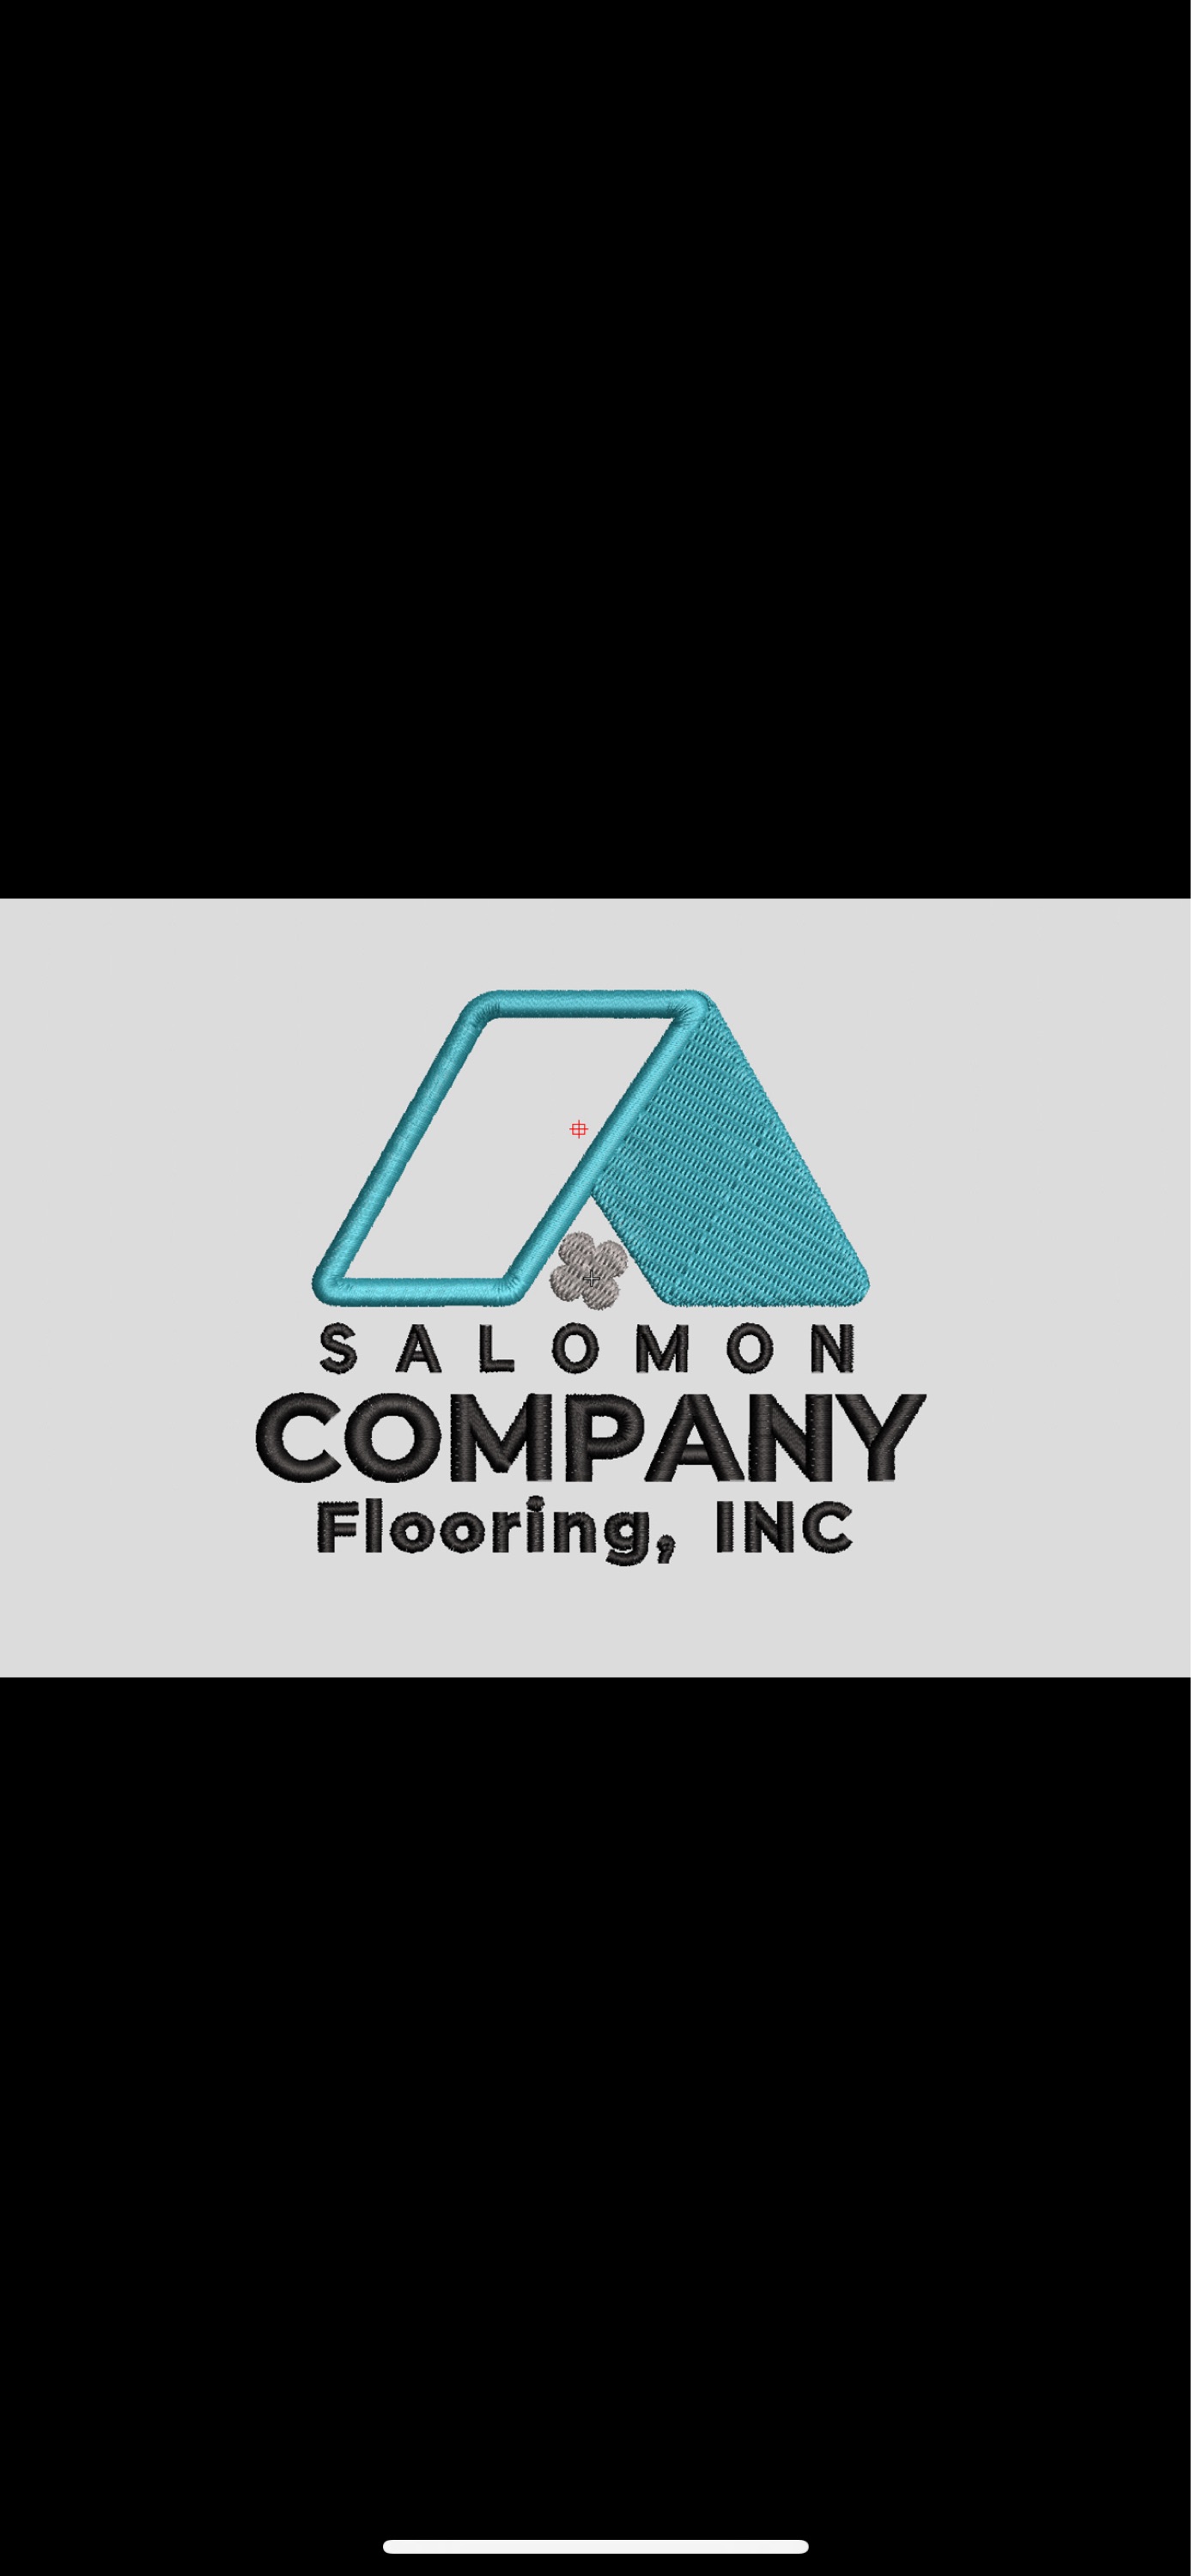 Salomon Company Flooring, Inc. Logo